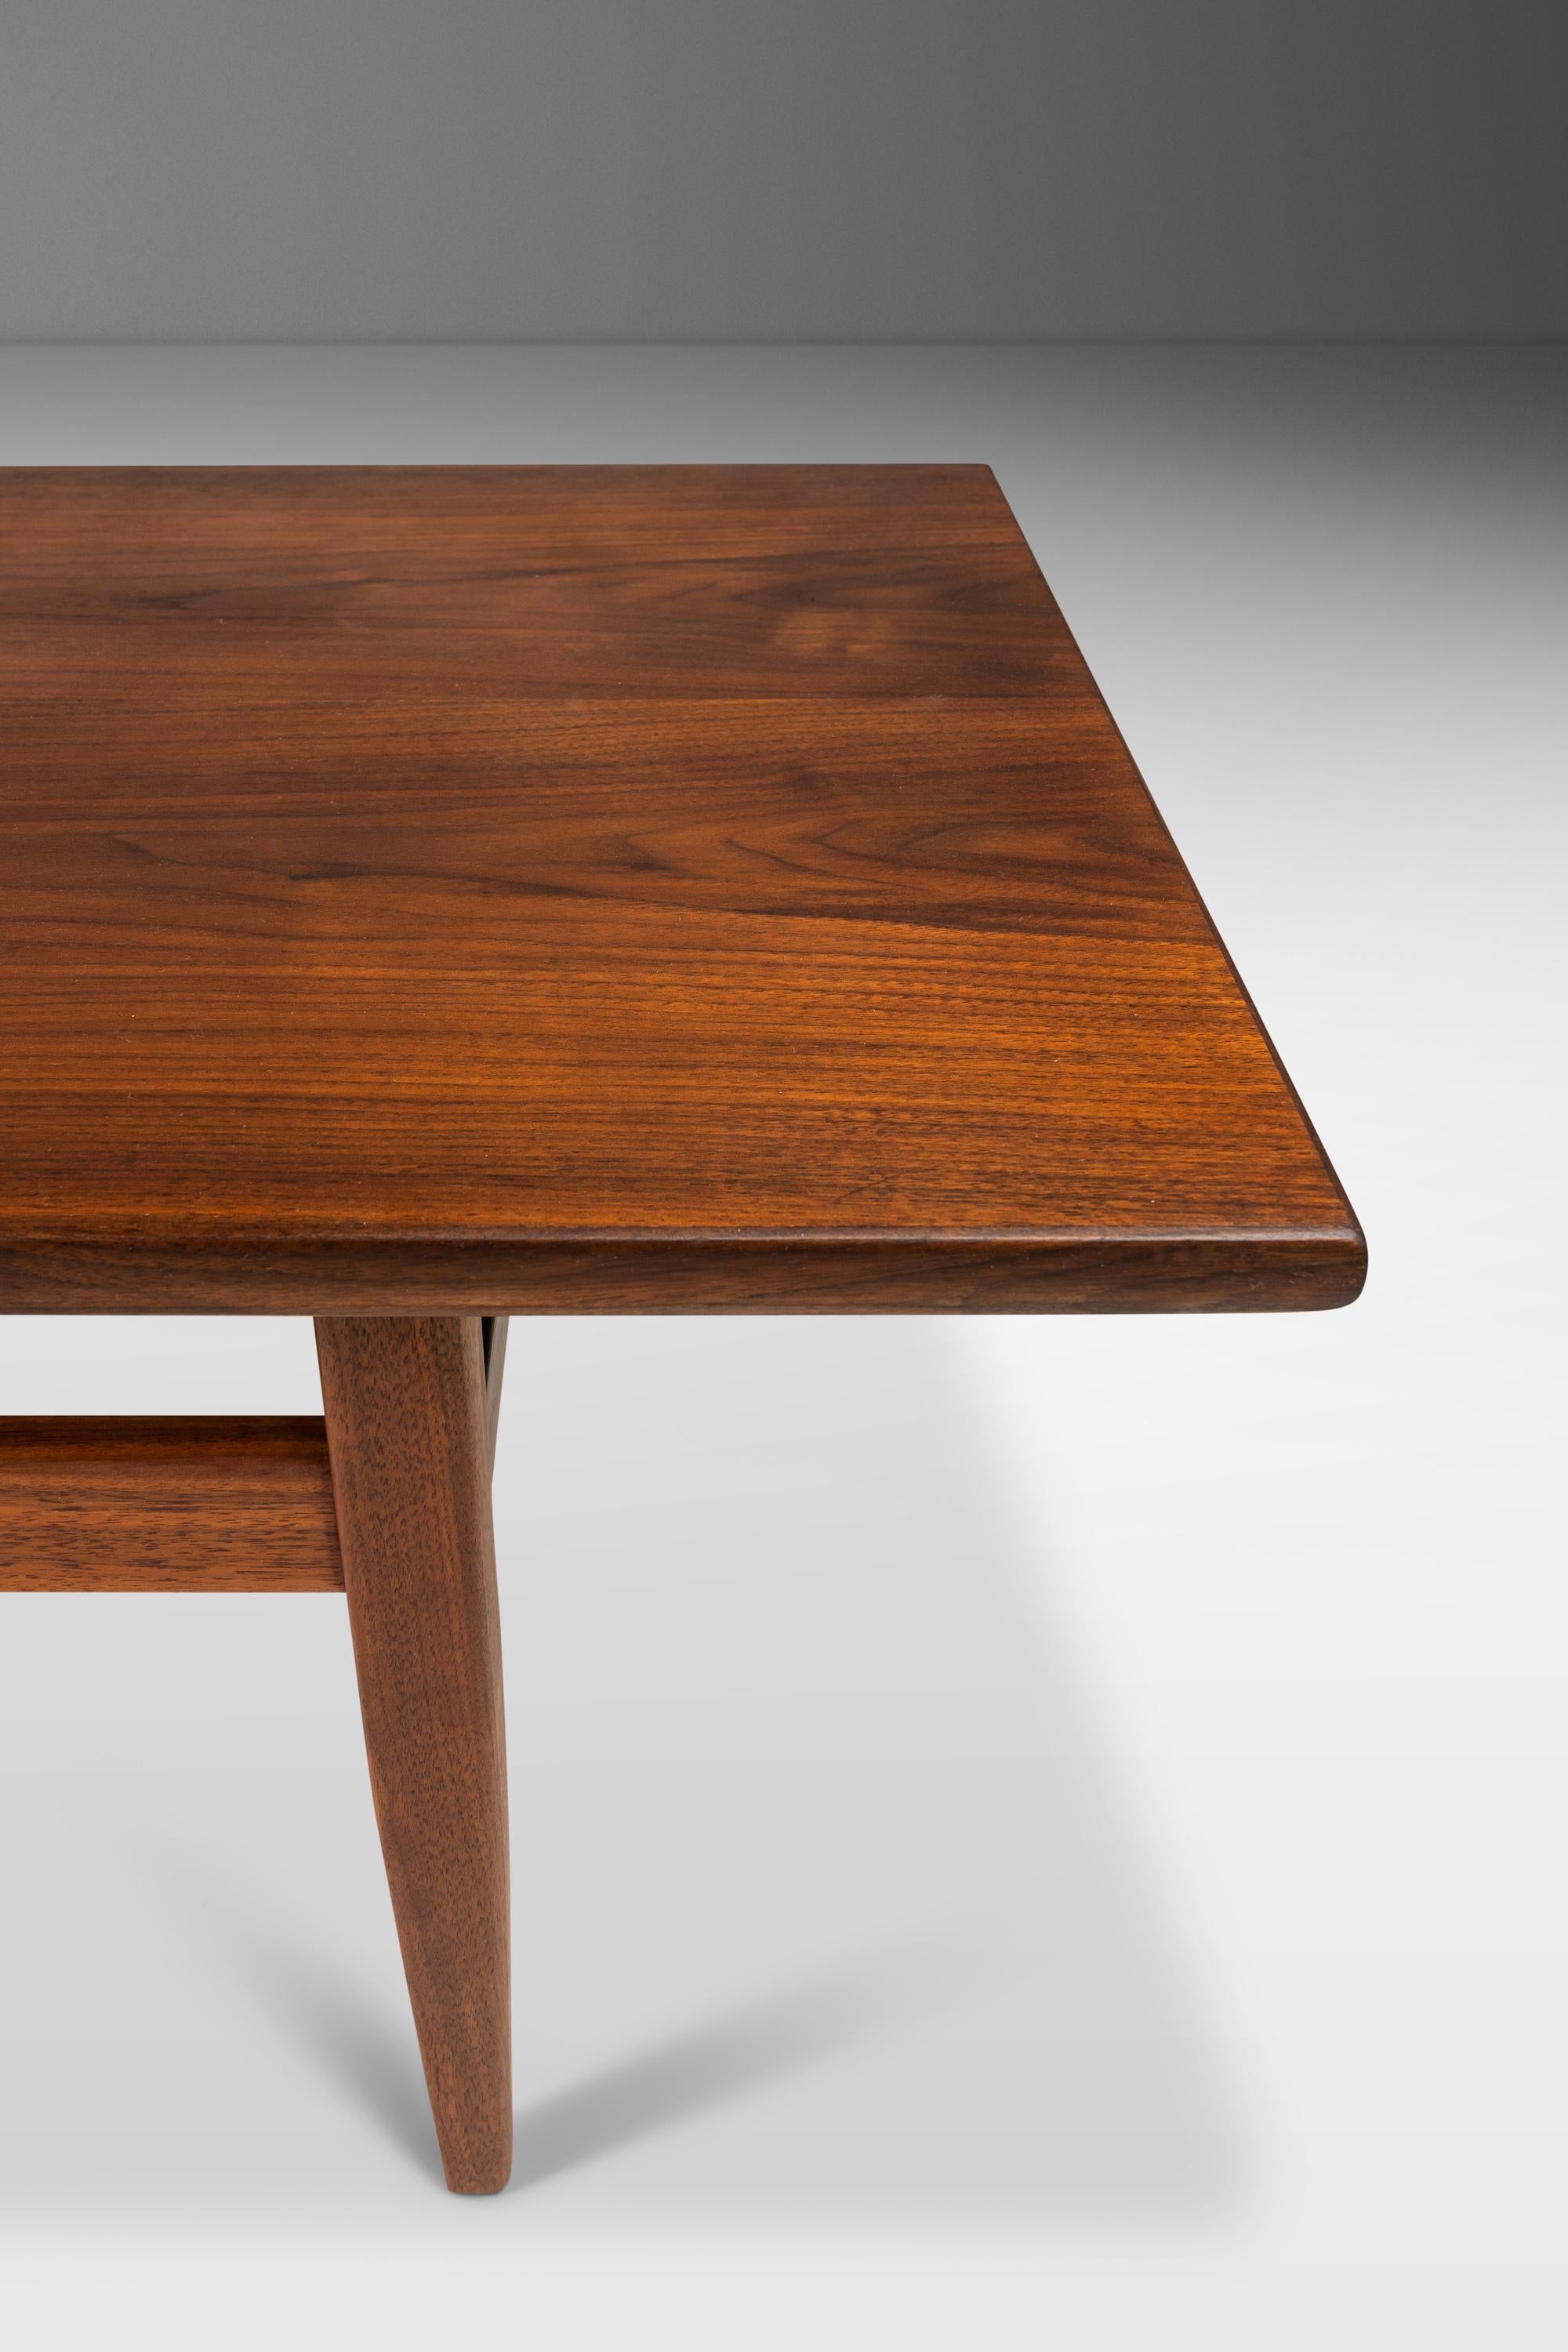 Mid-Century Modern Angular Coffee Table in Walnut, c. 1960's For Sale 4